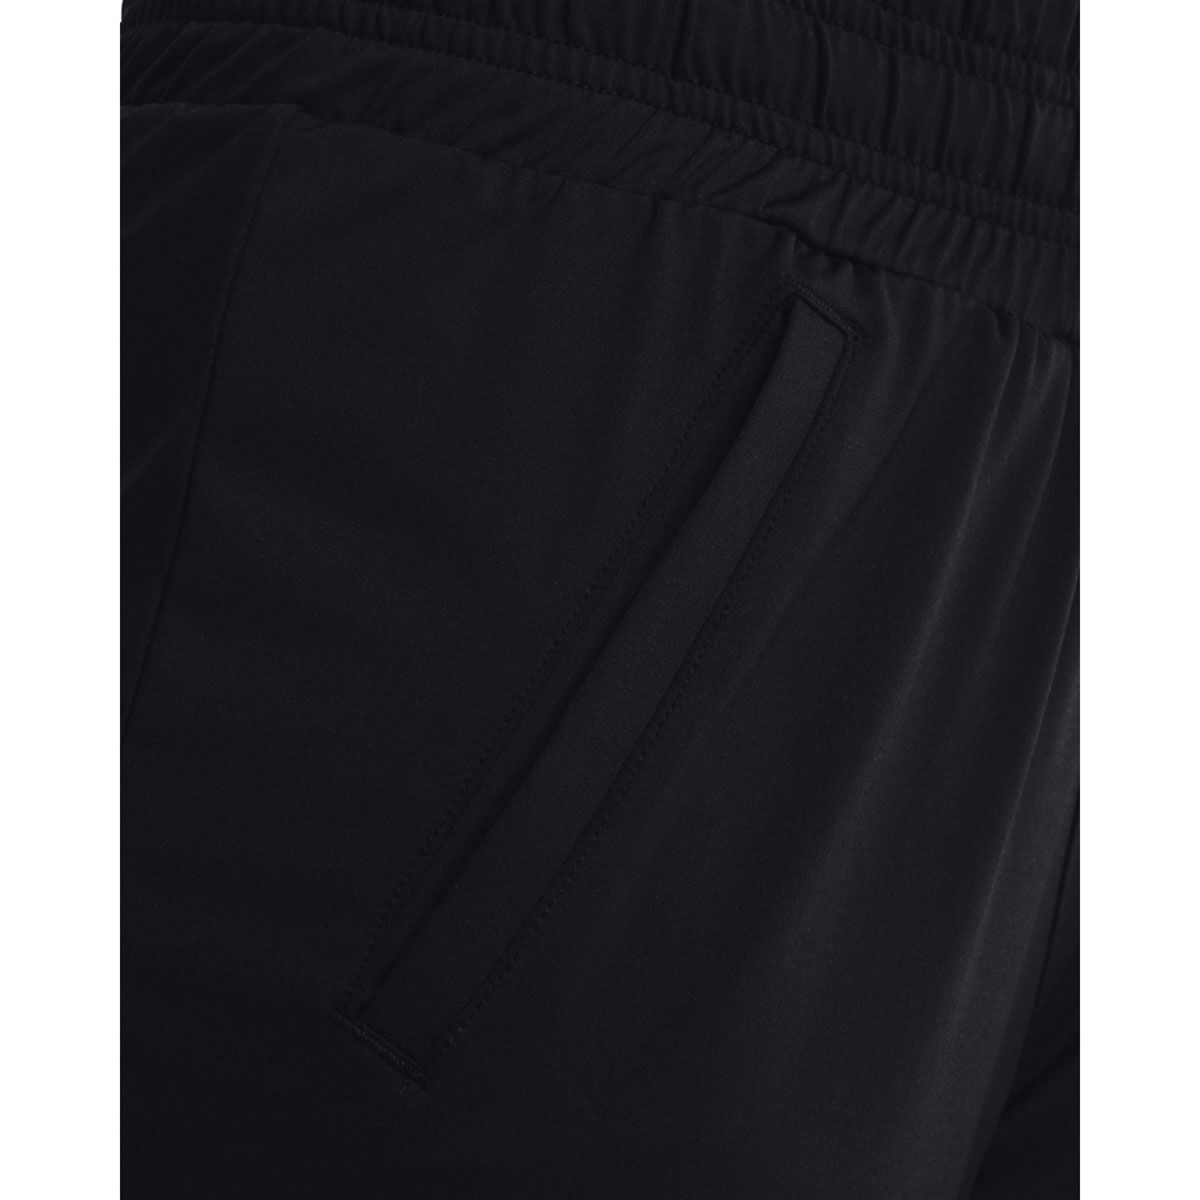 Fashion (AF02)Pantalones De Mujer Black Sport Running Pants Joggers Women  Cotton Harem Pants Women Harajuku Sweatpants Jogger Baggy Trousers DOU @  Best Price Online | Jumia Egypt